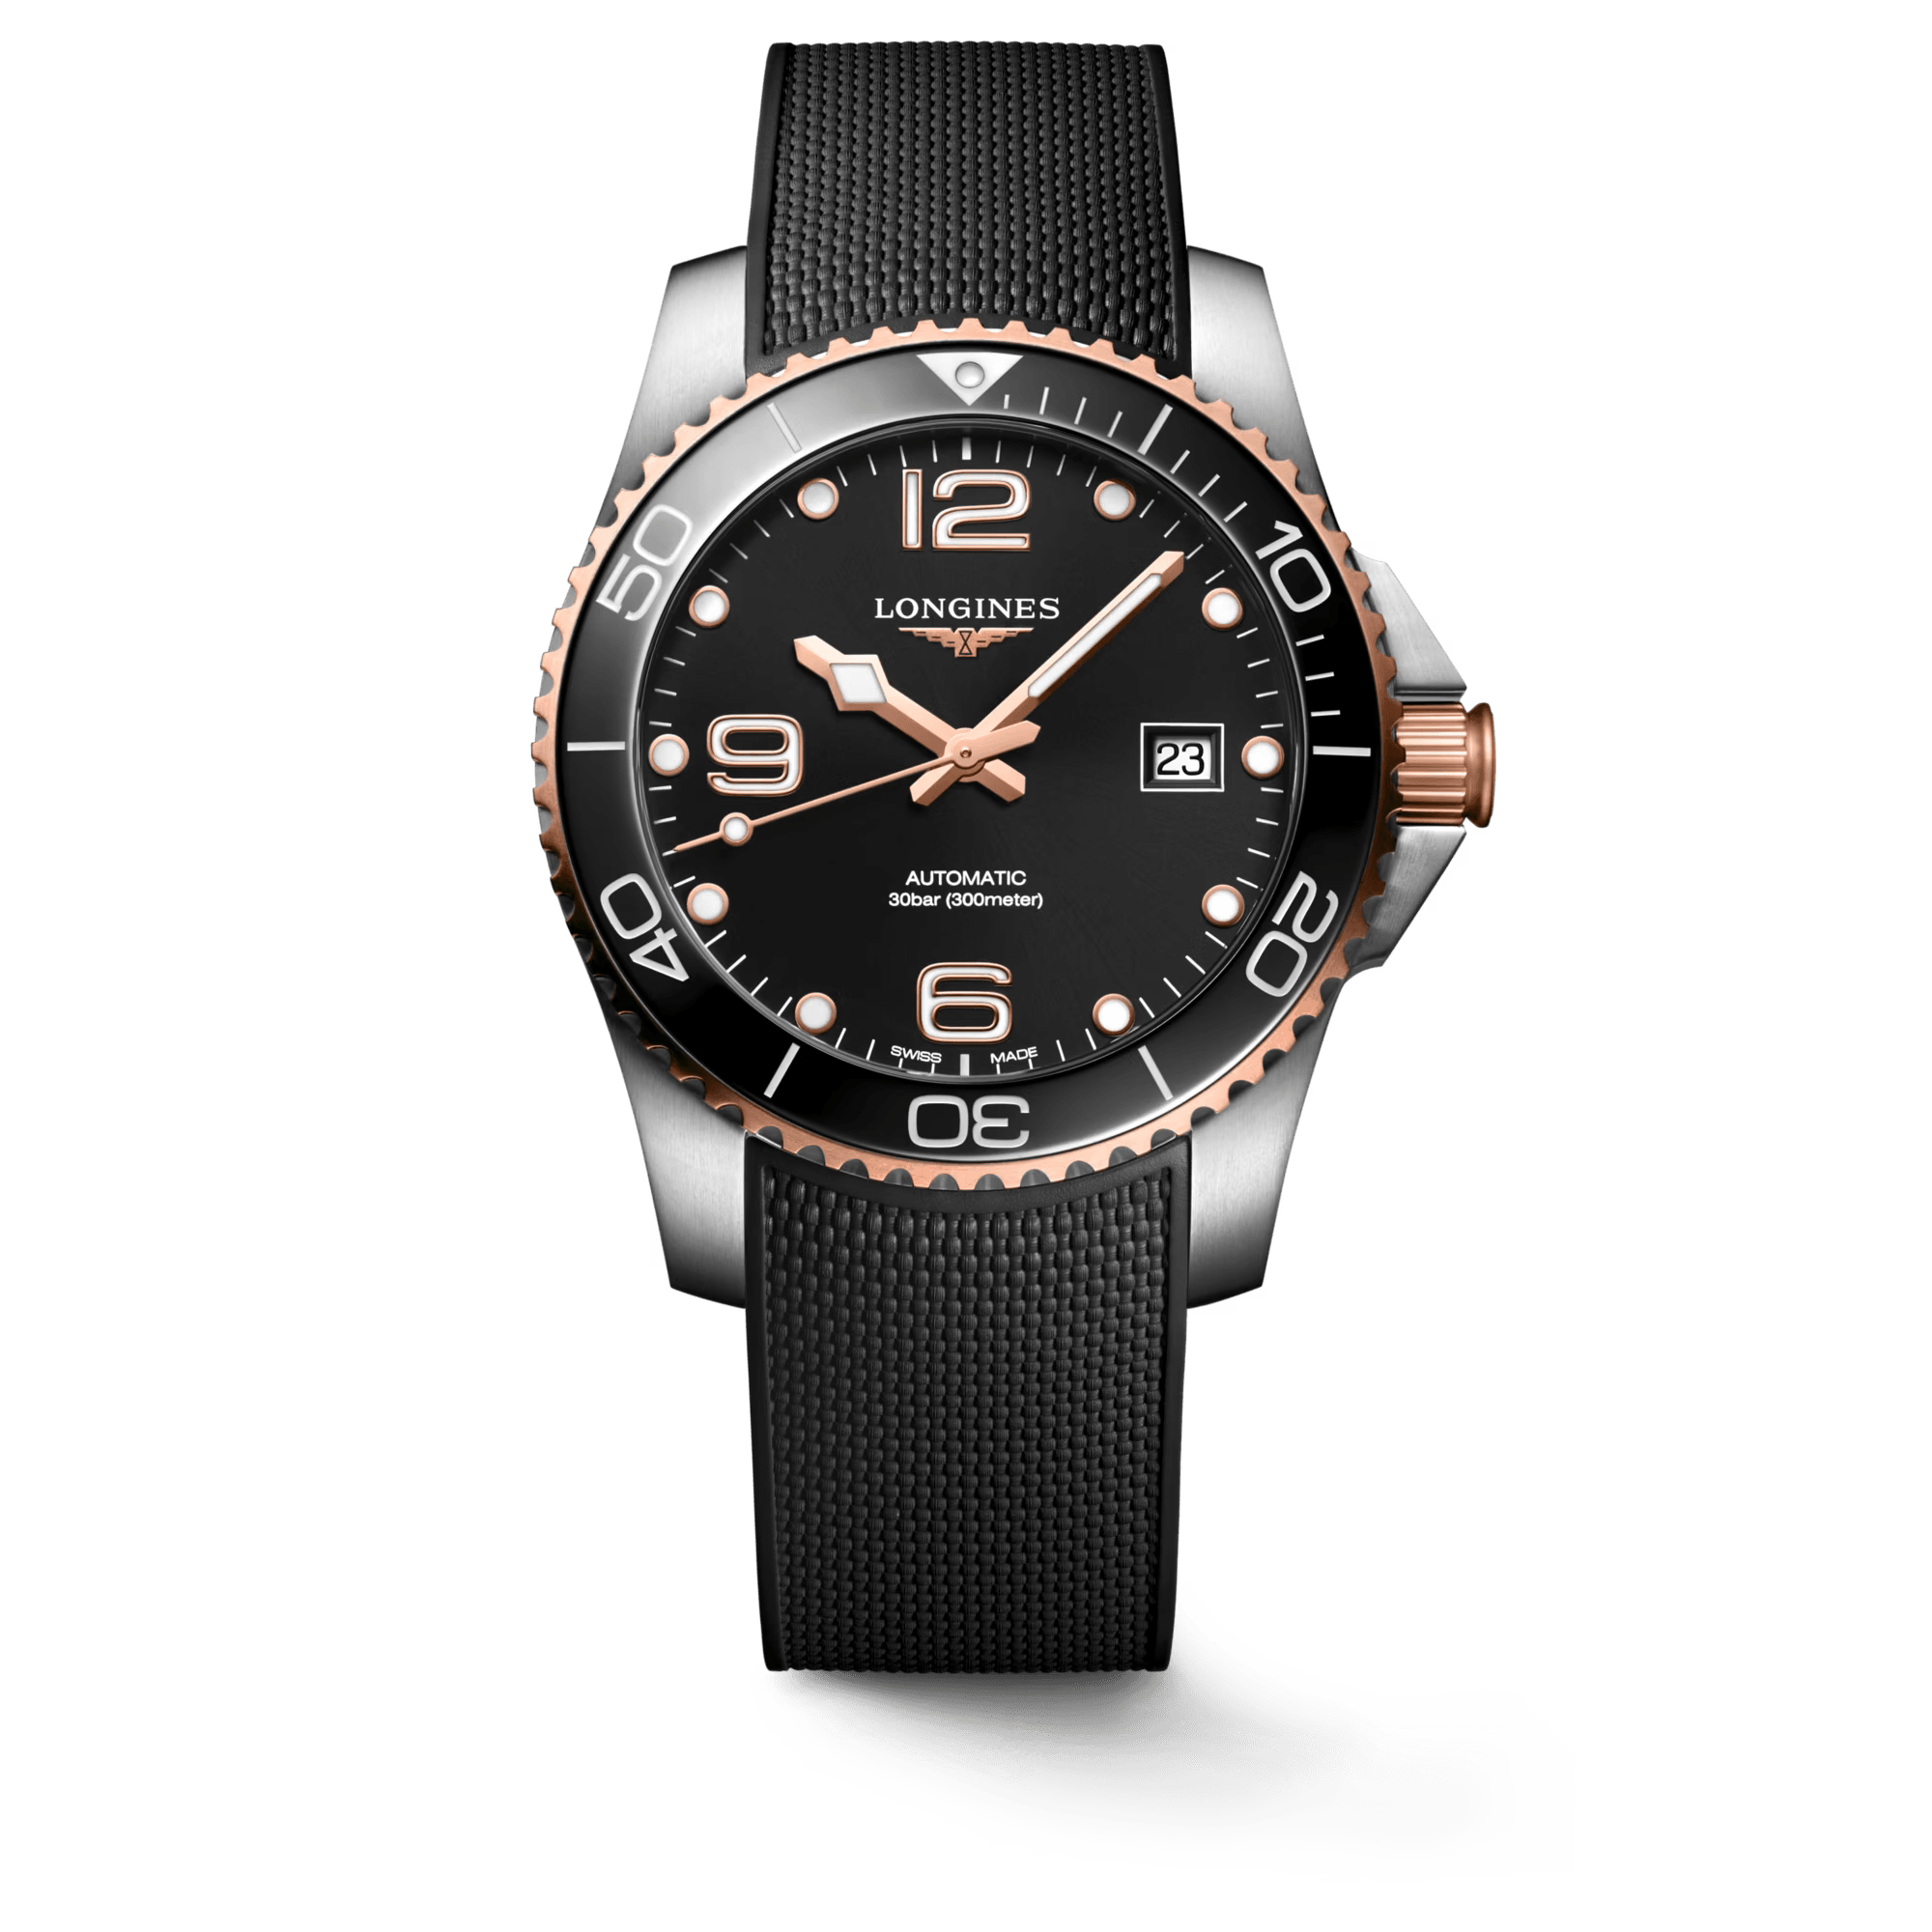 Longines Hydroconquest Automatic Men's Watch L37813589